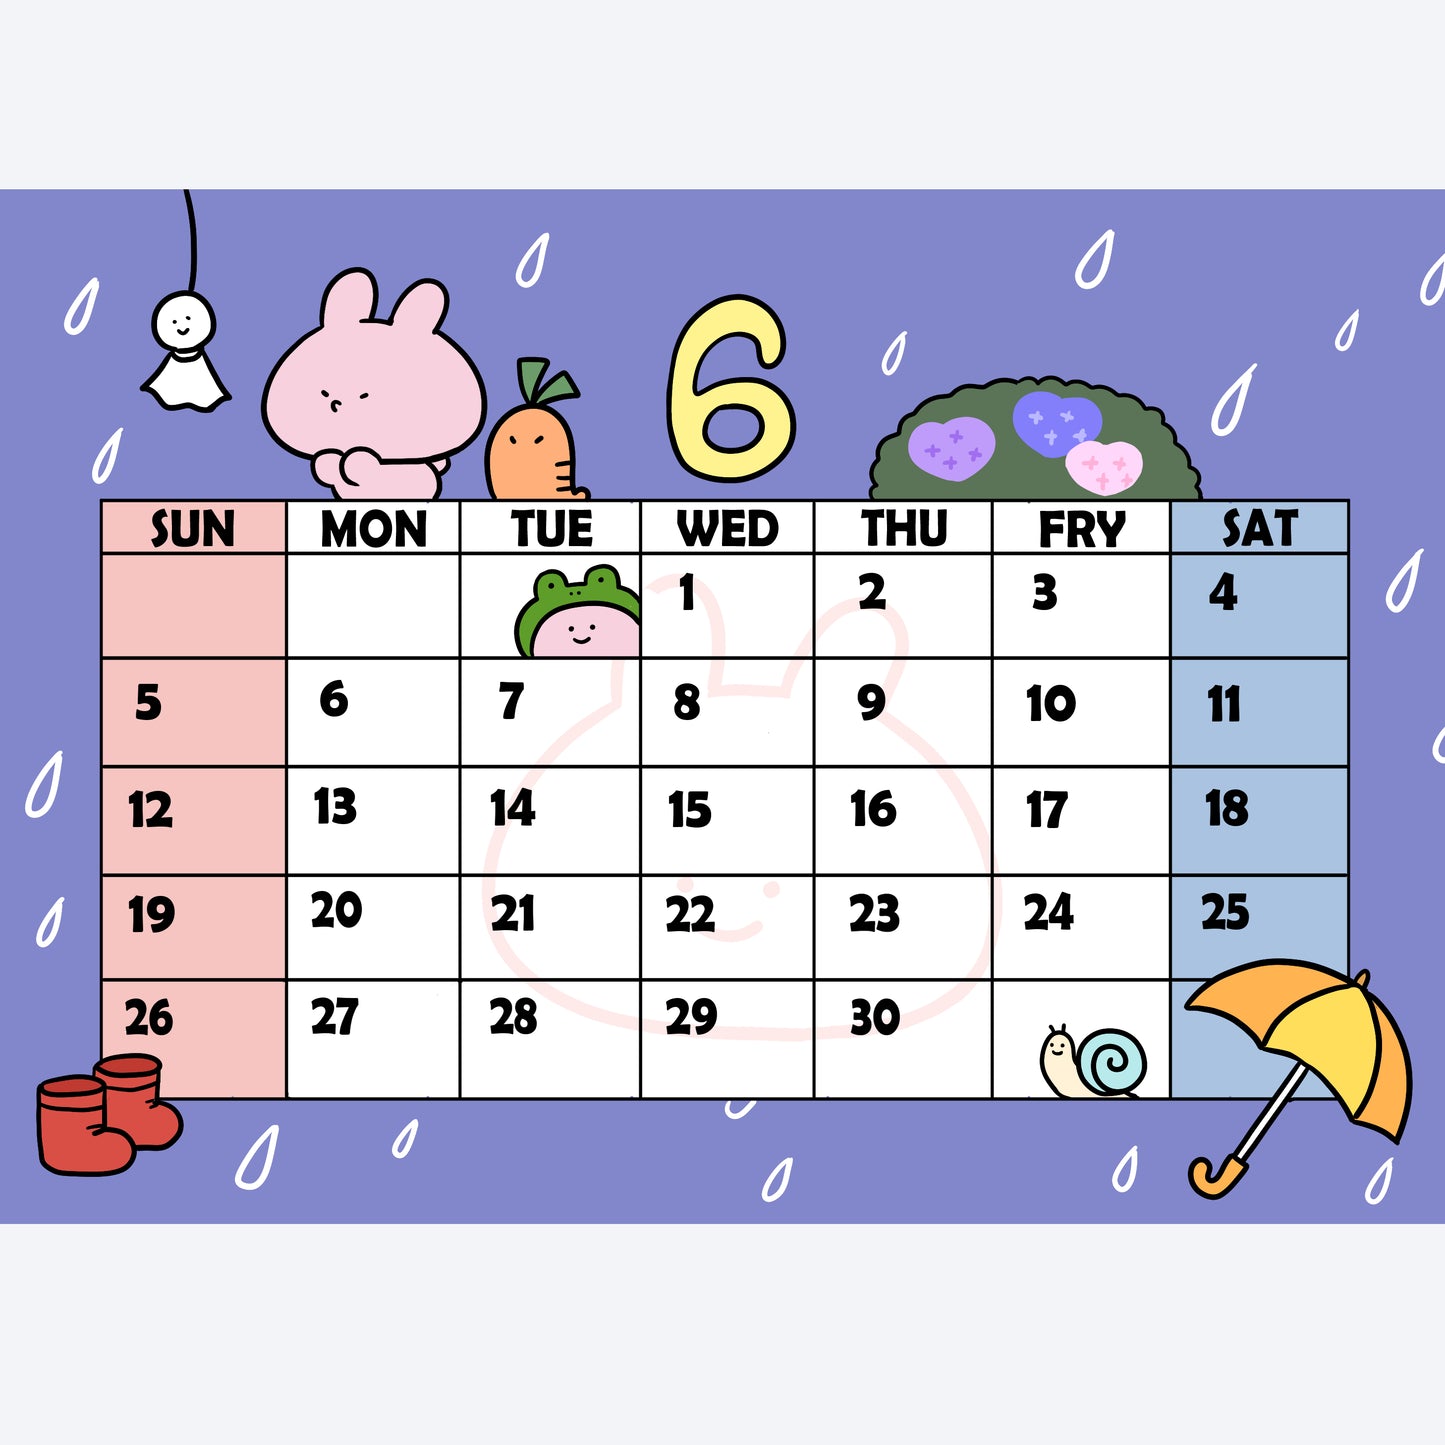 [Made to order] Asamimi-chan desk calendar